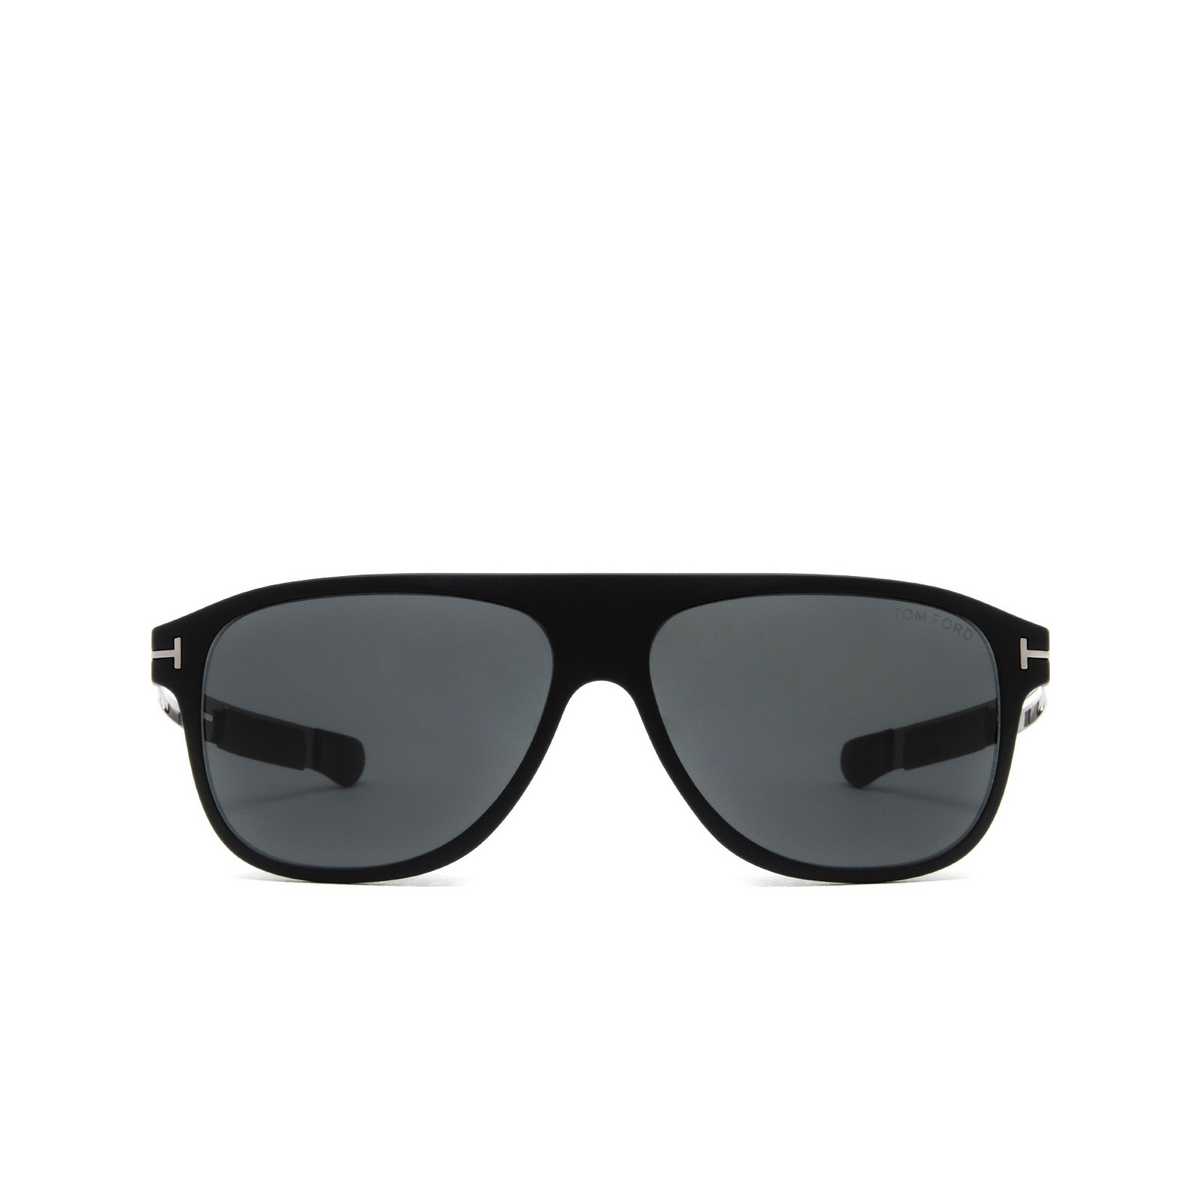 Tom Ford TODD Sunglasses 02V Black - front view